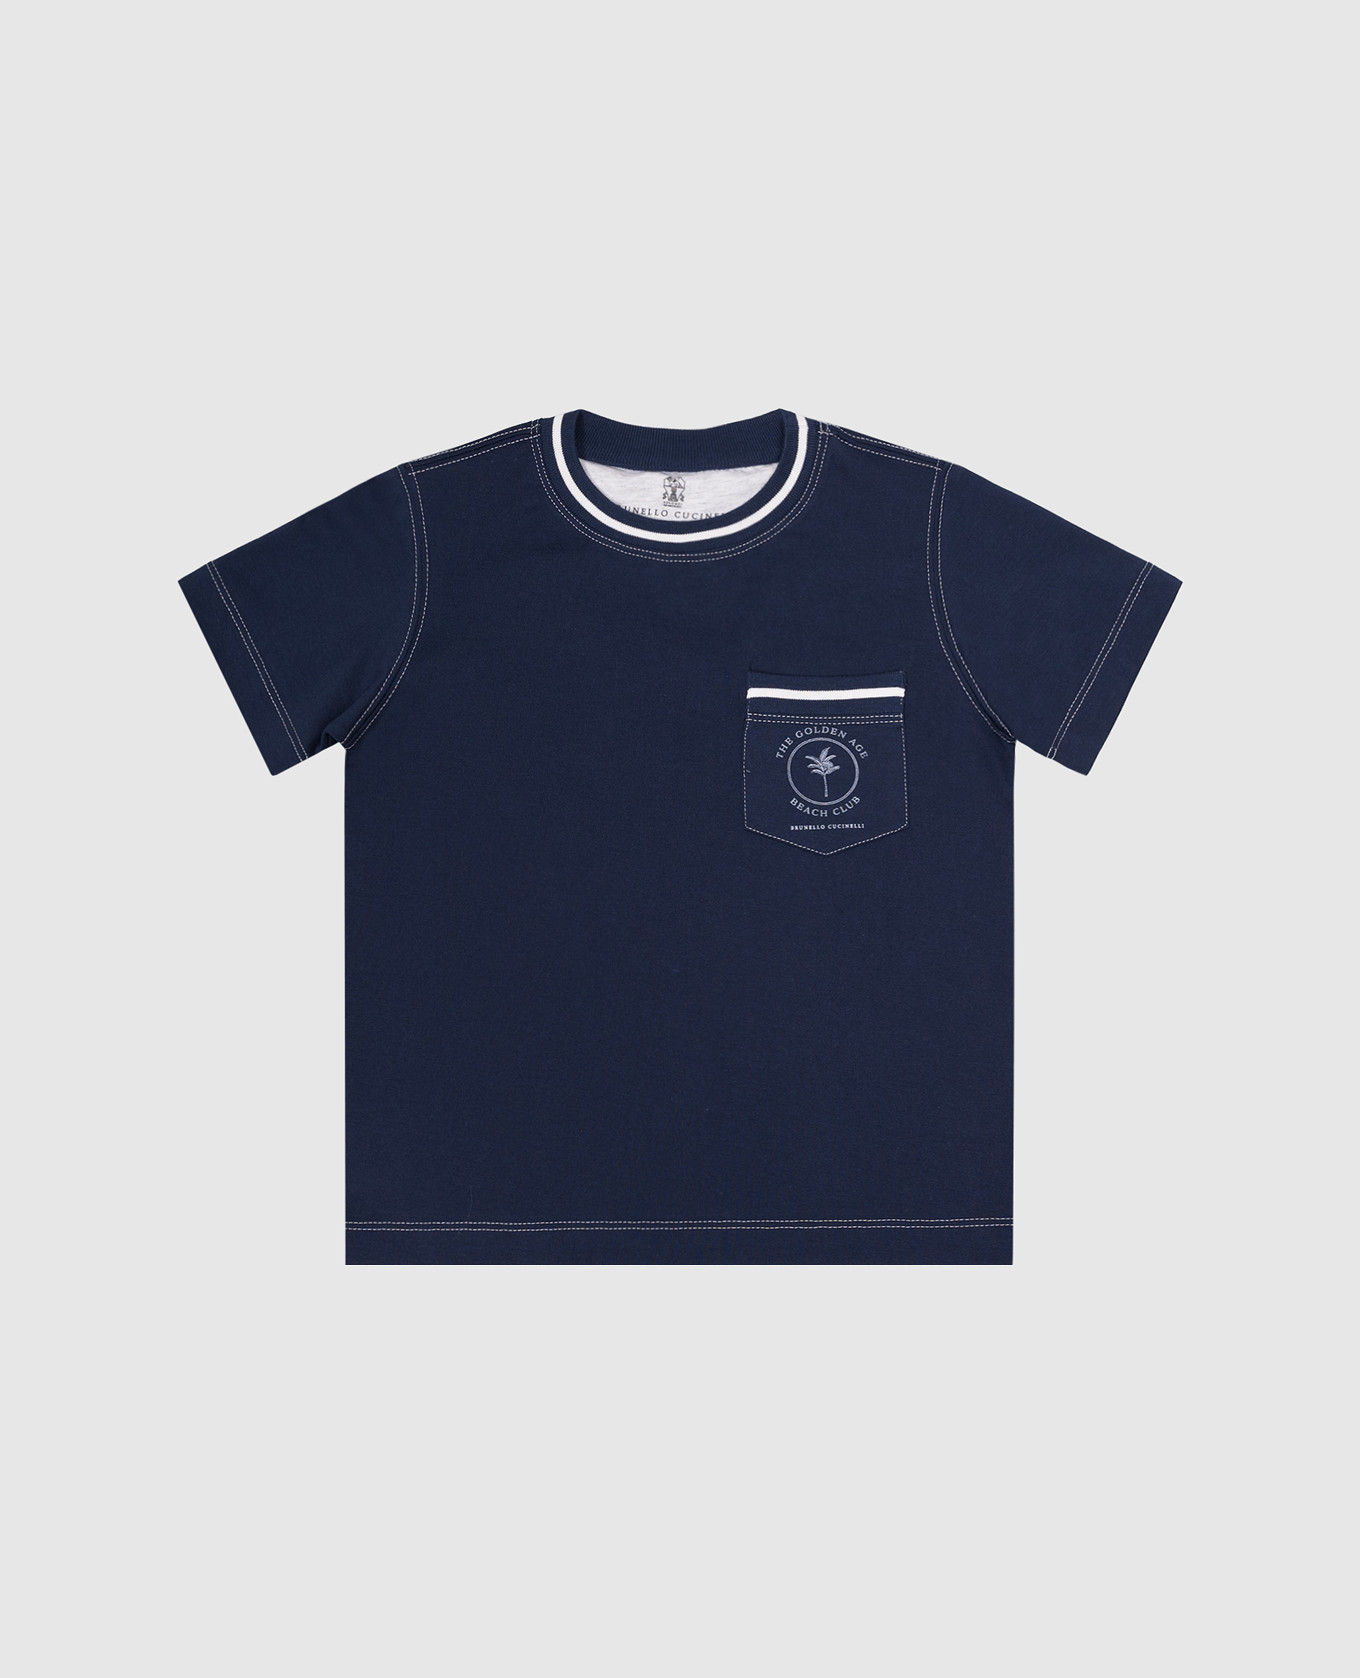 Children's blue T-shirt with a print